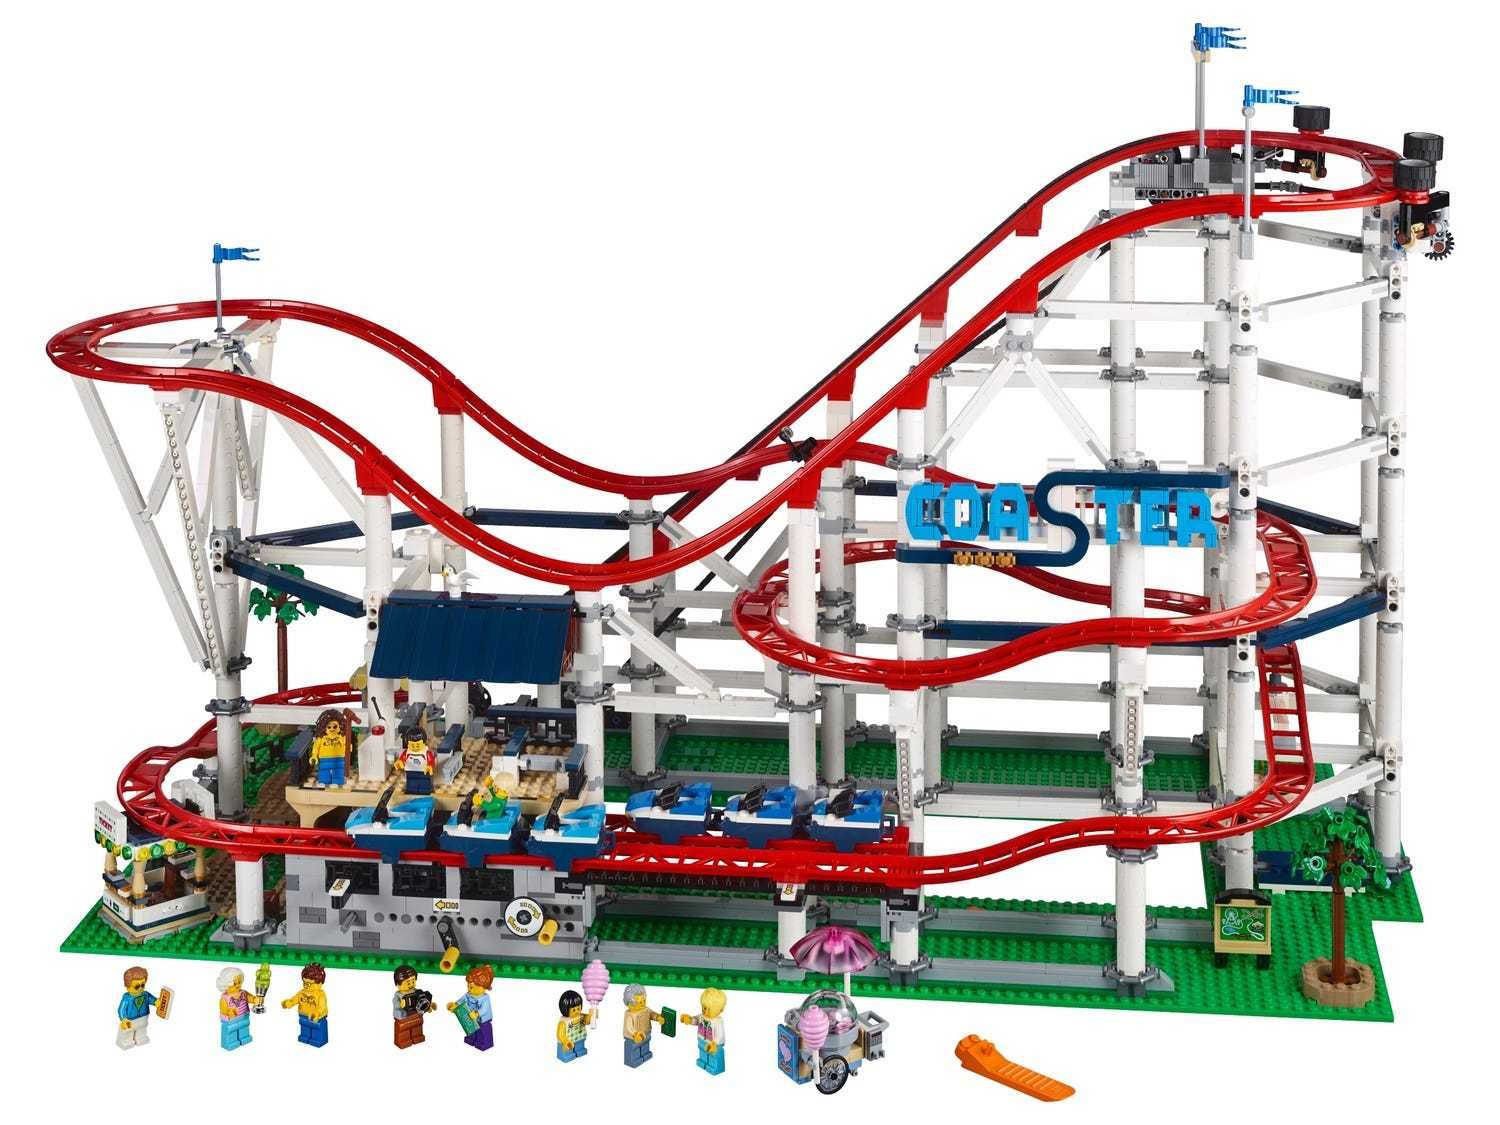 Lego - 10261 Roller Coaster - NOU Sigilat ORIGINAL